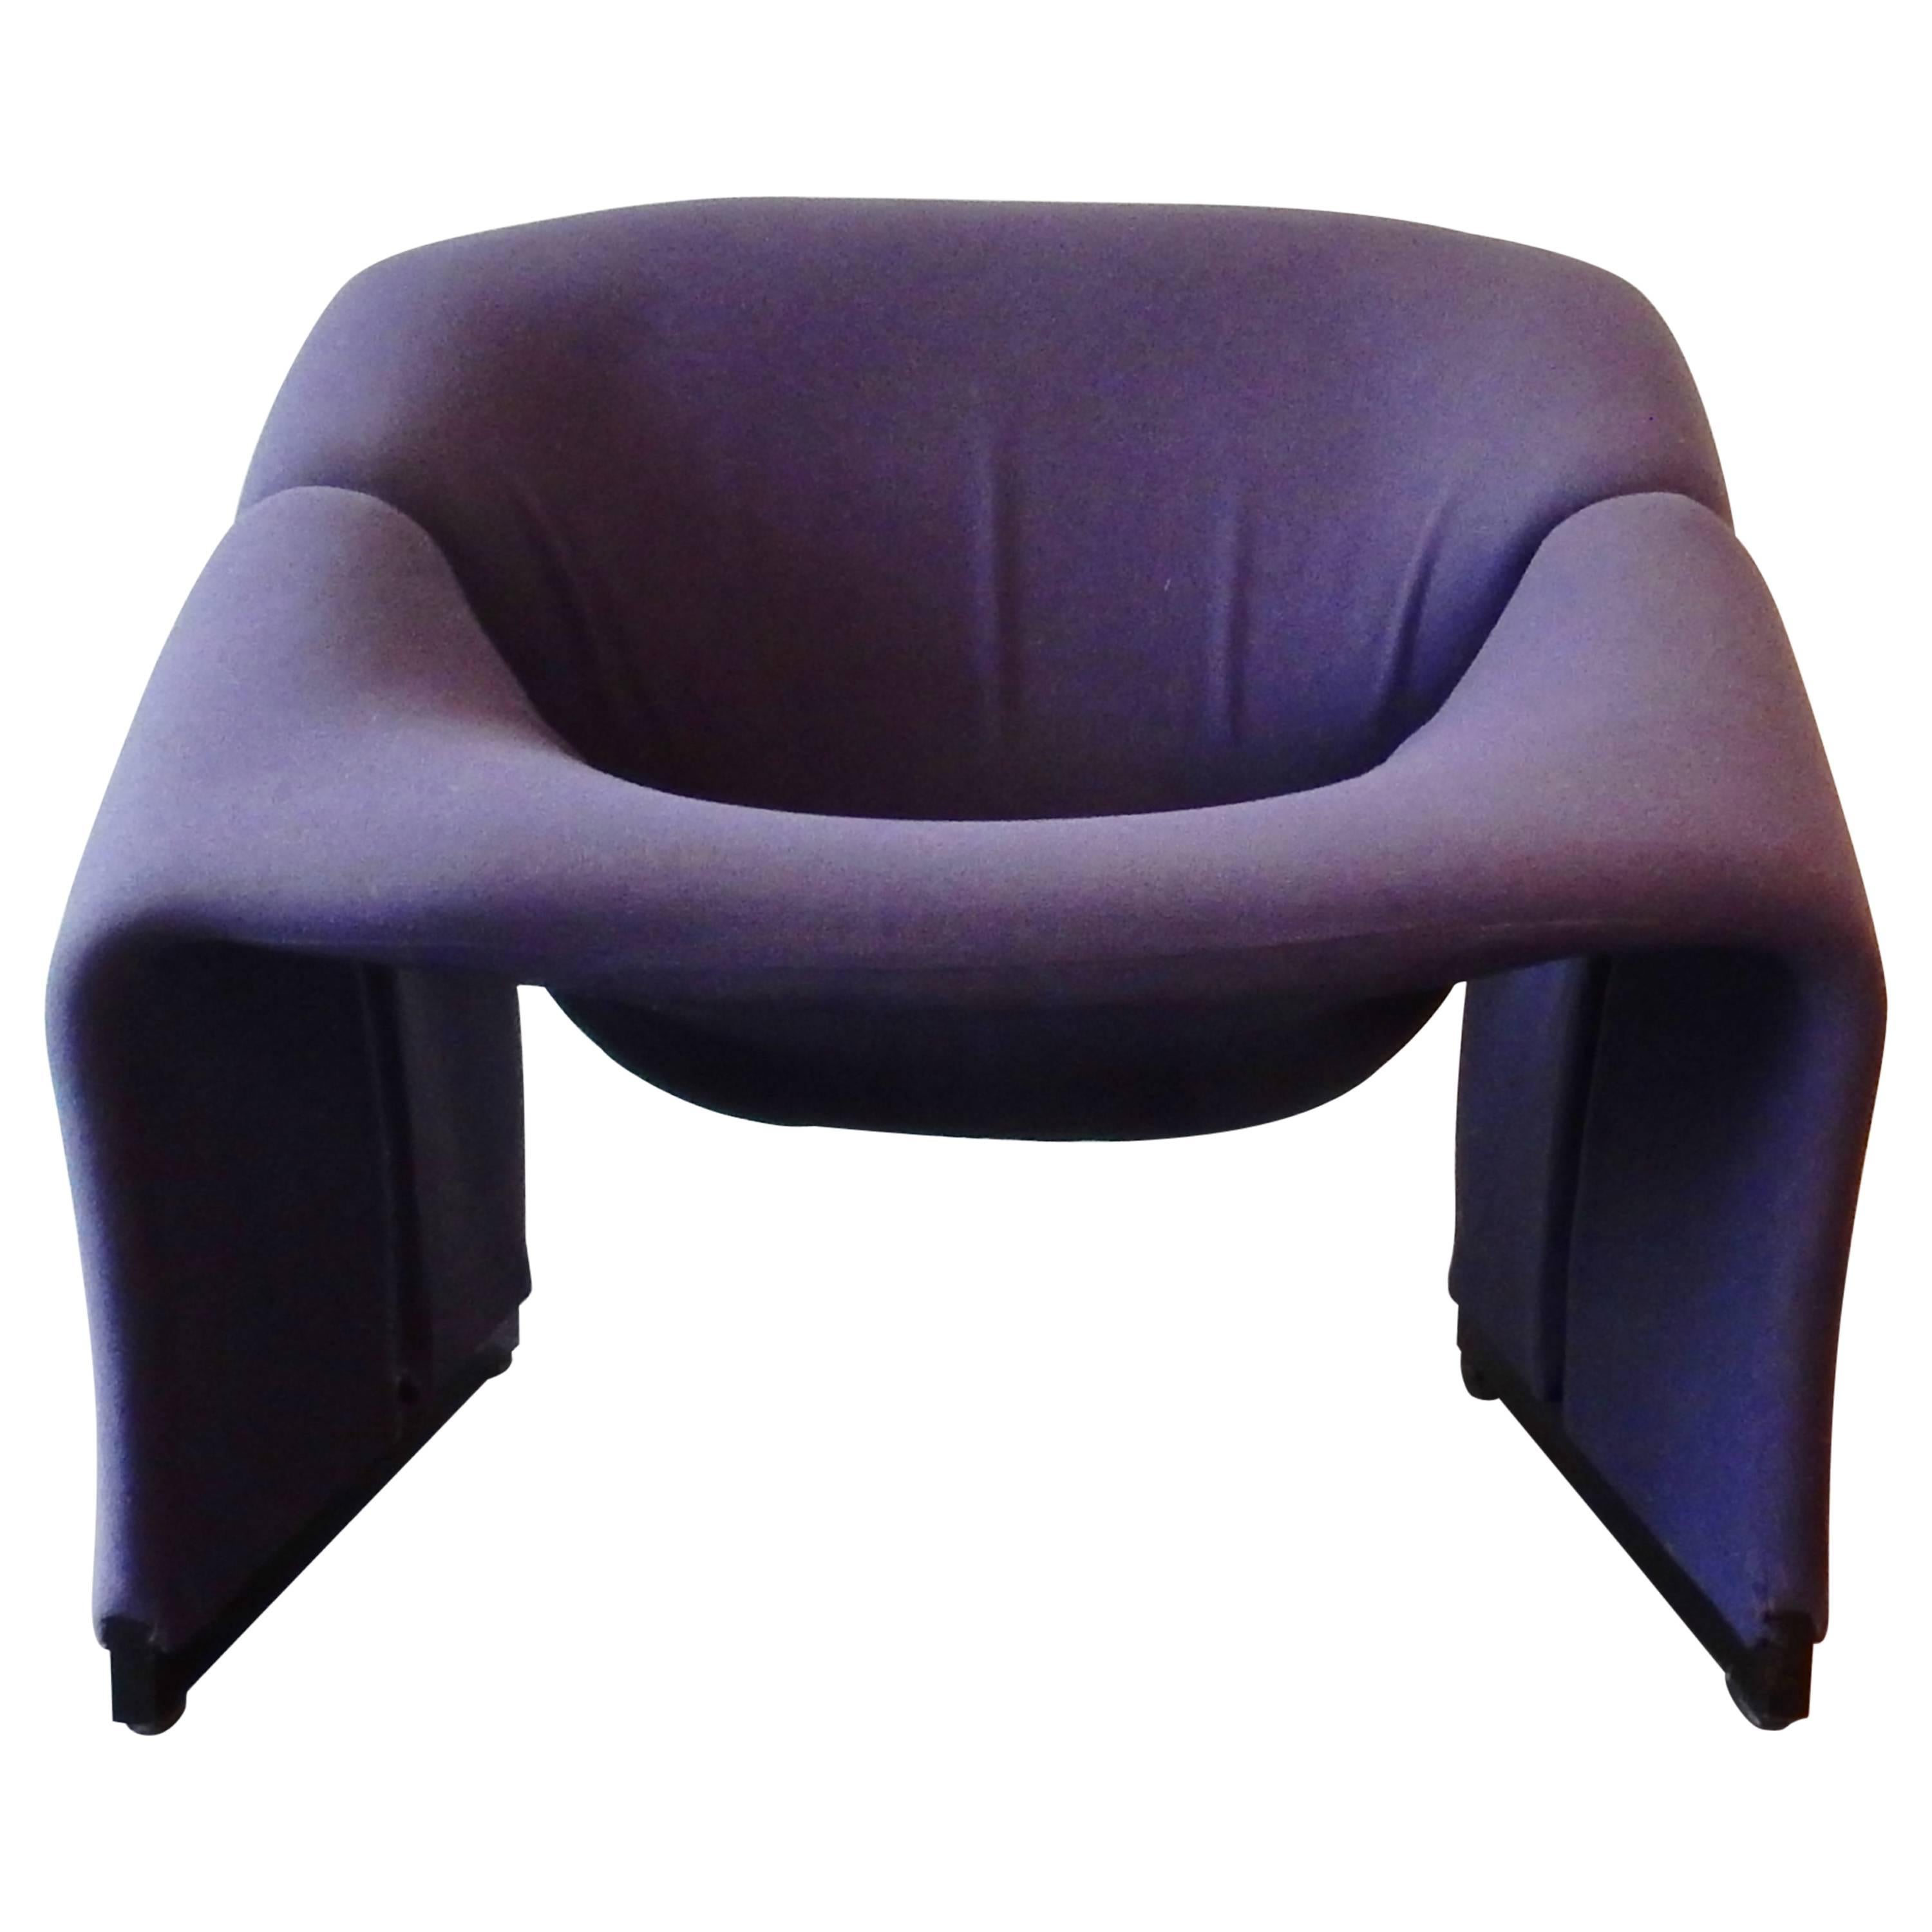 Model 580 Lounge Chair by Pierre Paulin for Artifort, Netherlands, 1960s